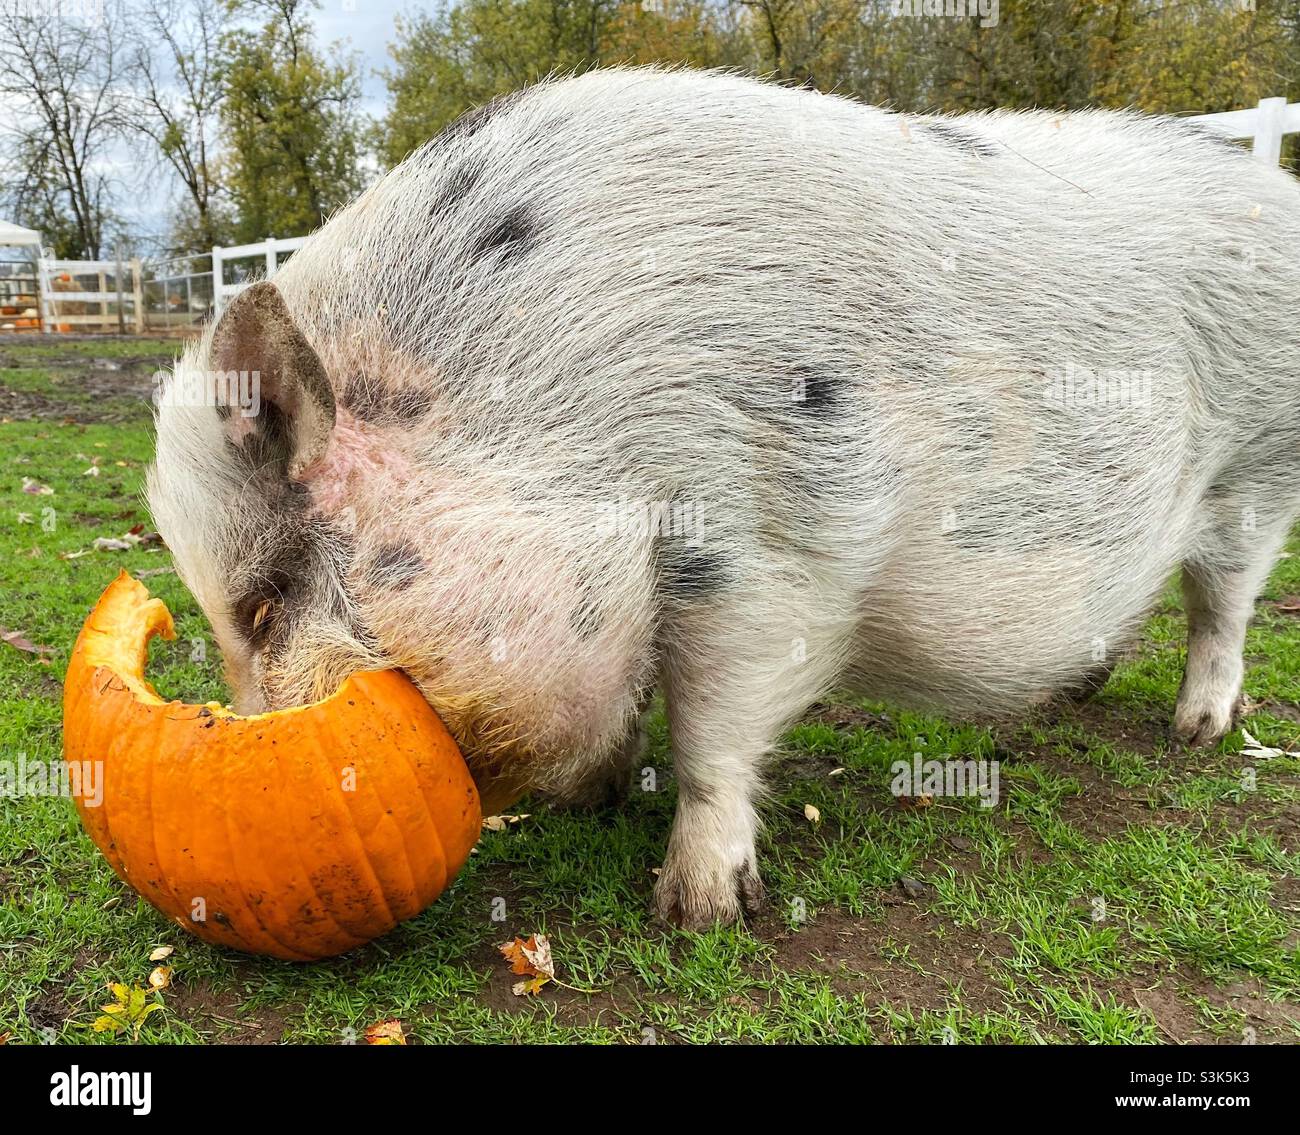 A large pig eating a pumpkin. Stock Photo